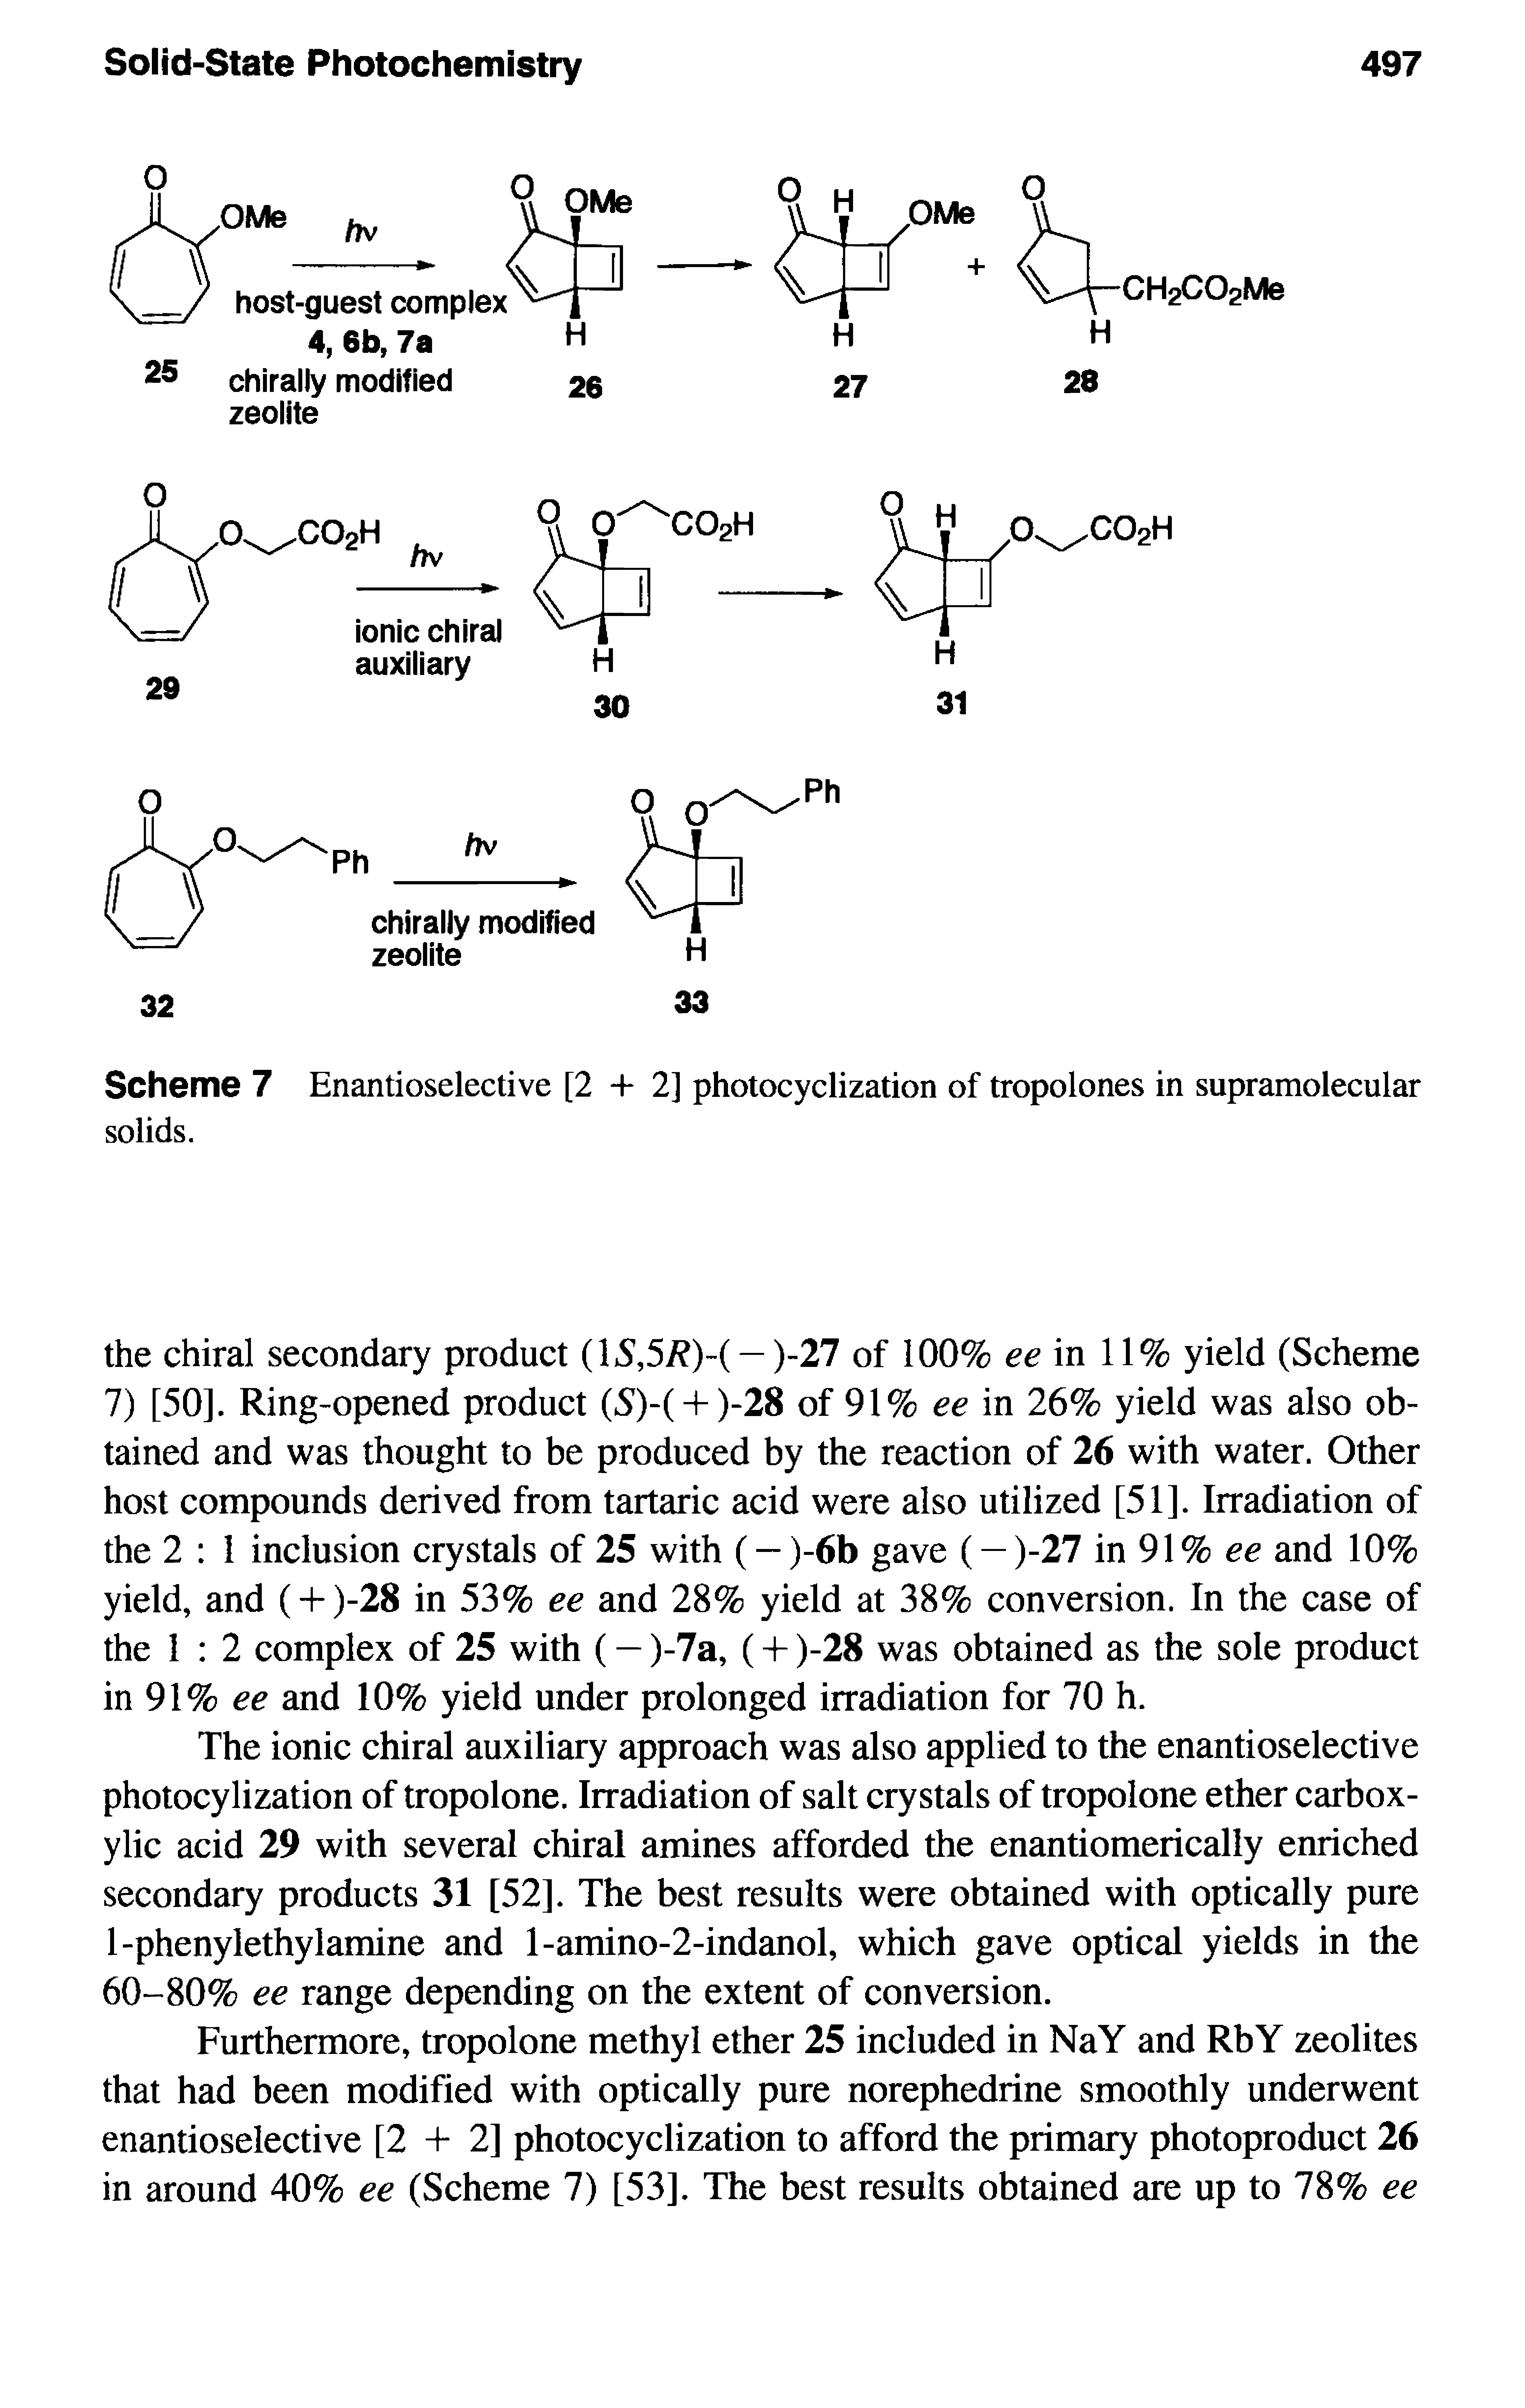 Scheme 7 Enantioselective [2 4- 2] photocyclization of tropolones in supramolecular solids.